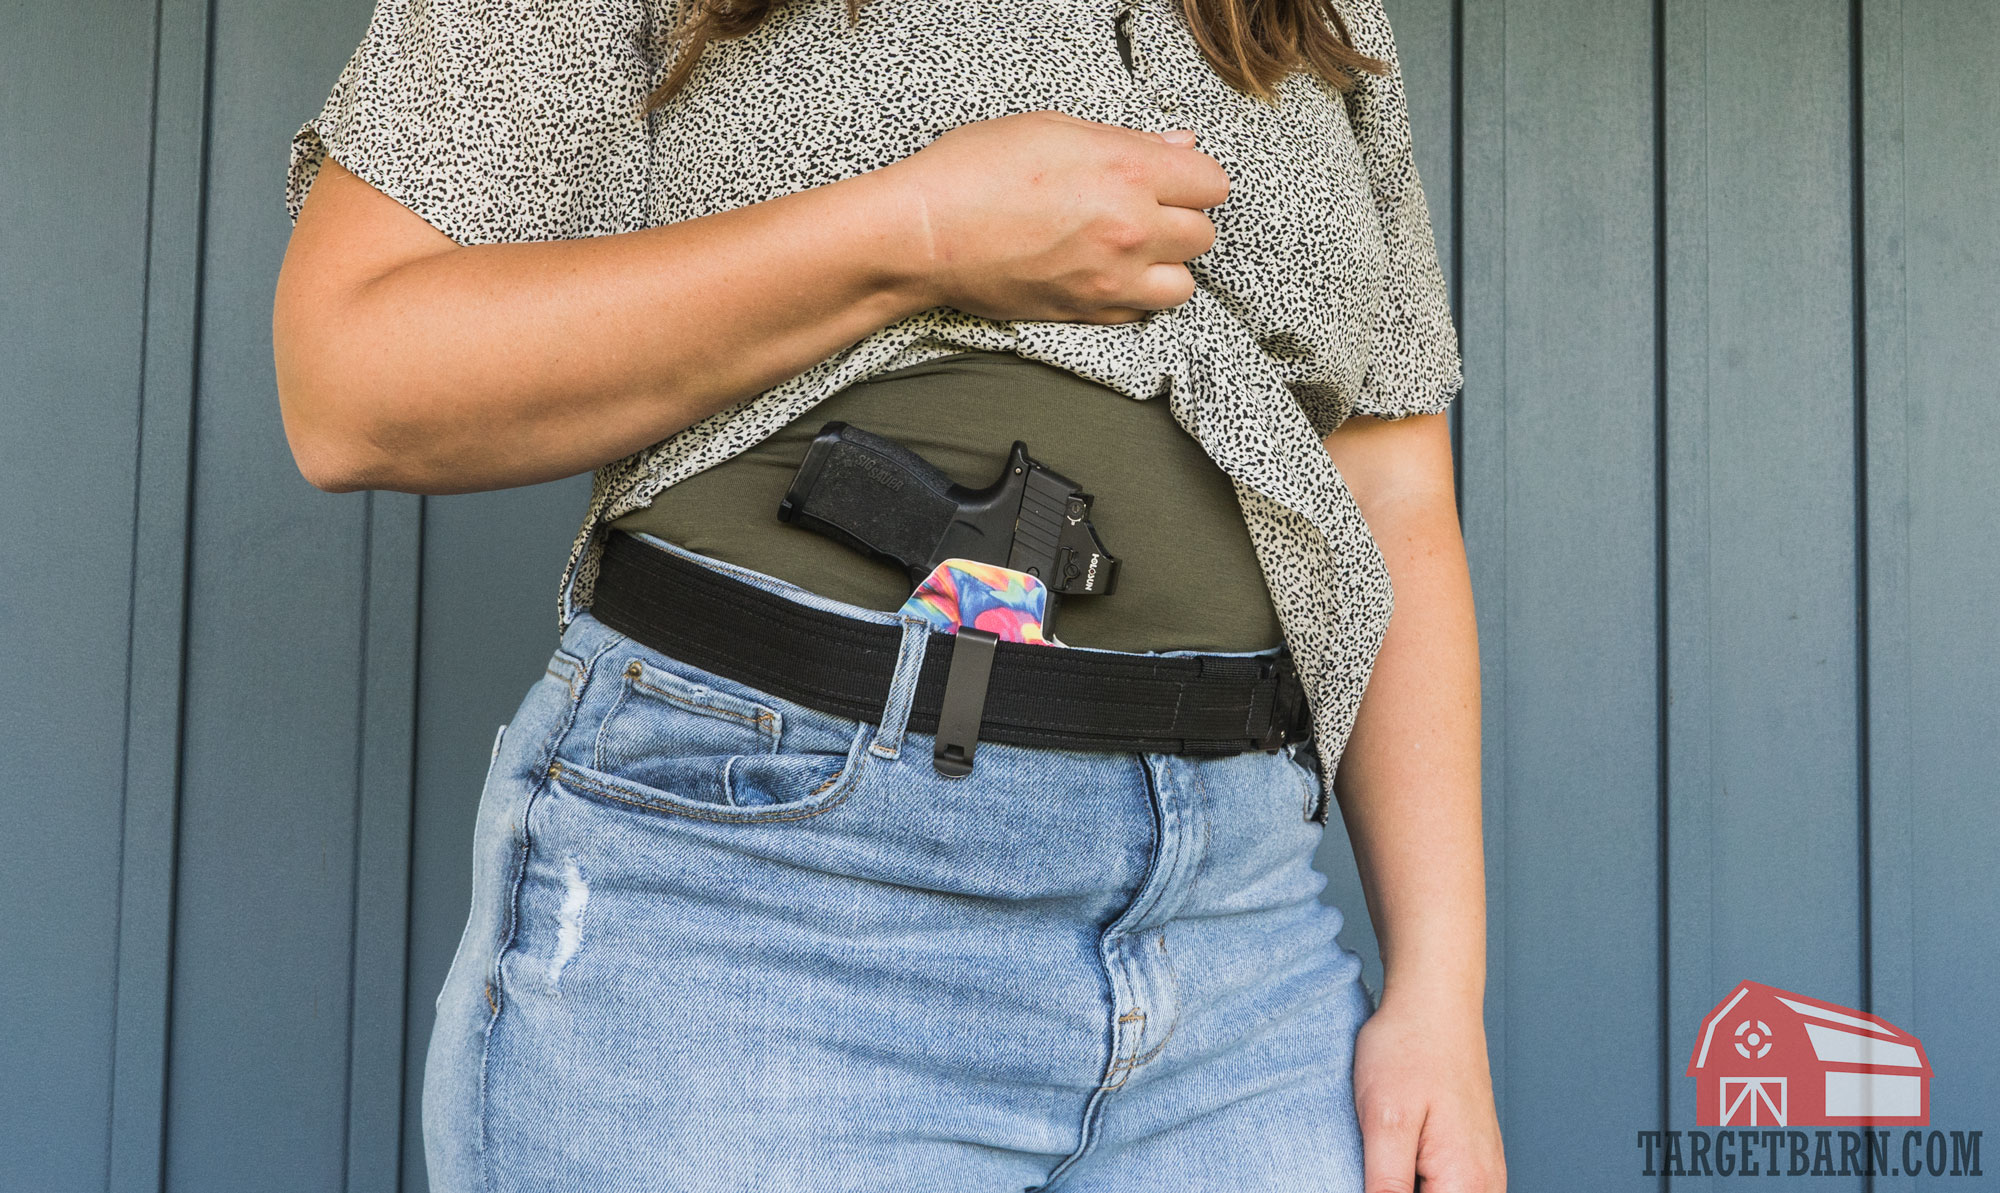 carrying a pistol appendix inside the waistband